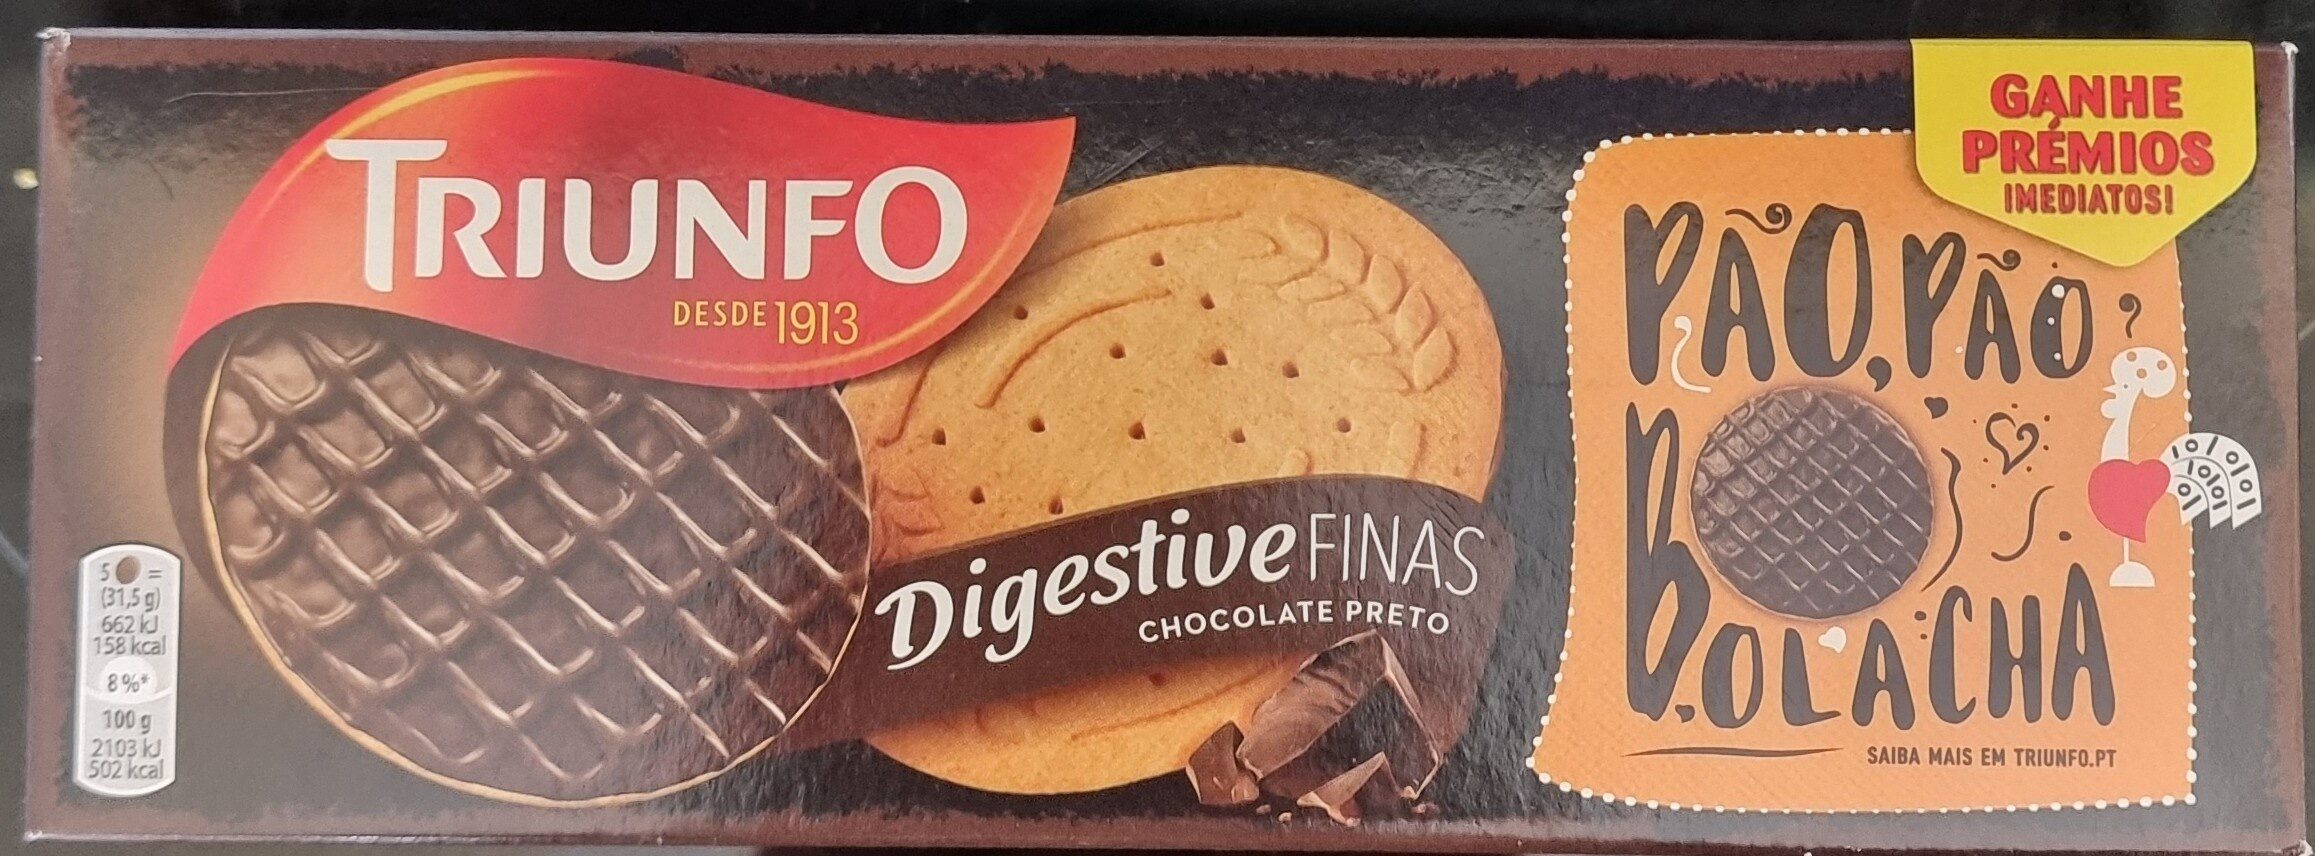 Digestive finas chocolate preto - Product - pt